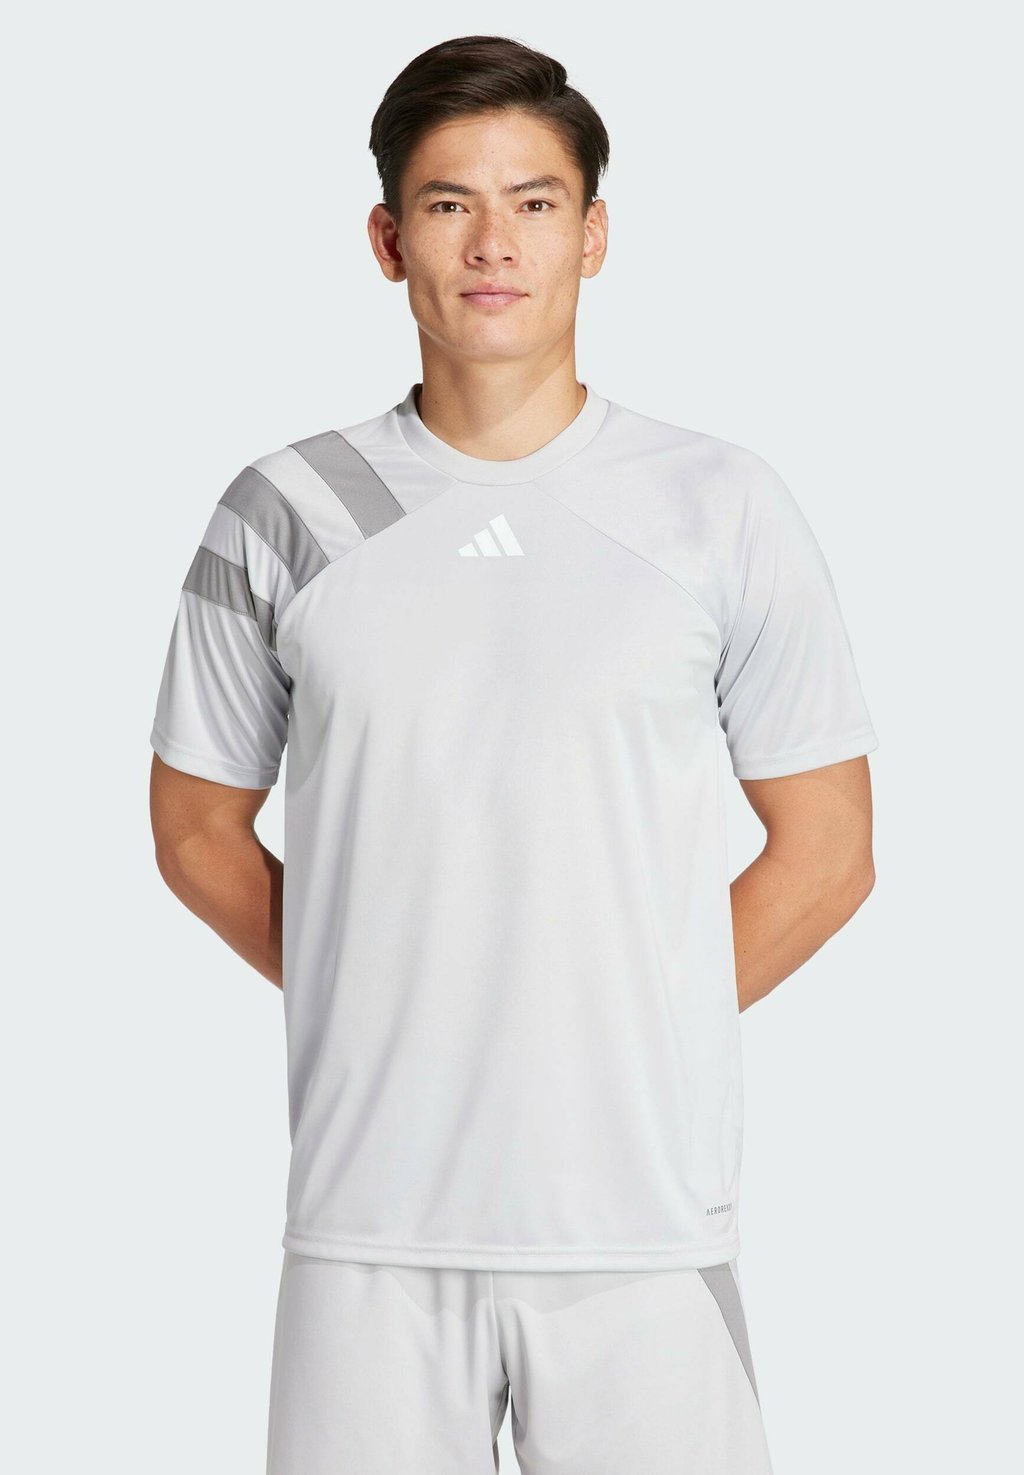 Футболка с принтом Fortore 23 Adidas, цвет team light grey white цена и фото